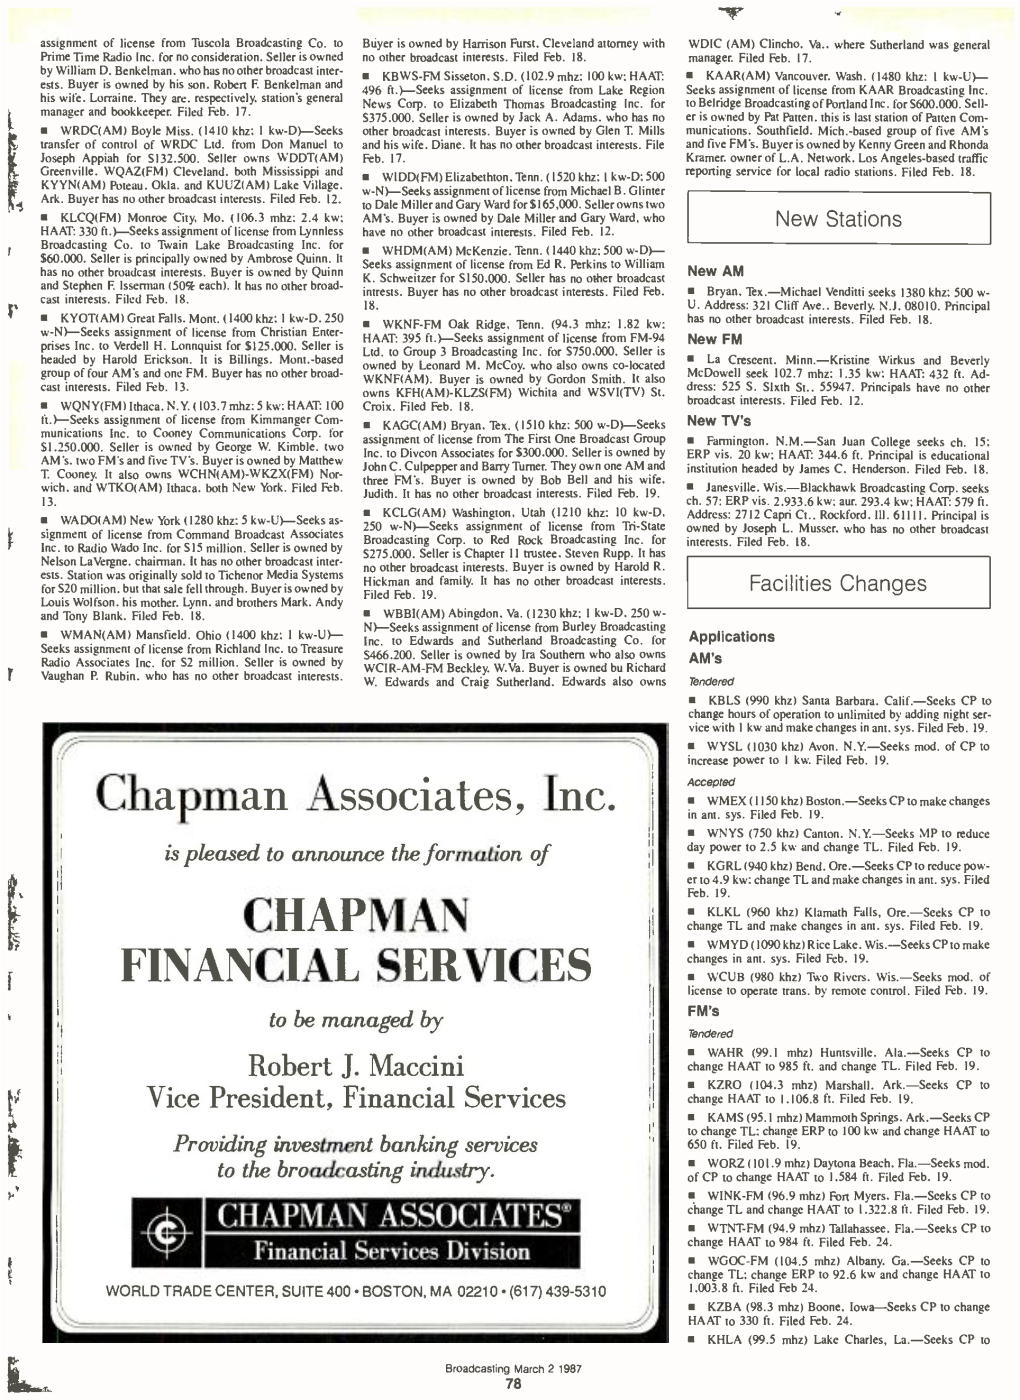 Chapman Associates, Inc